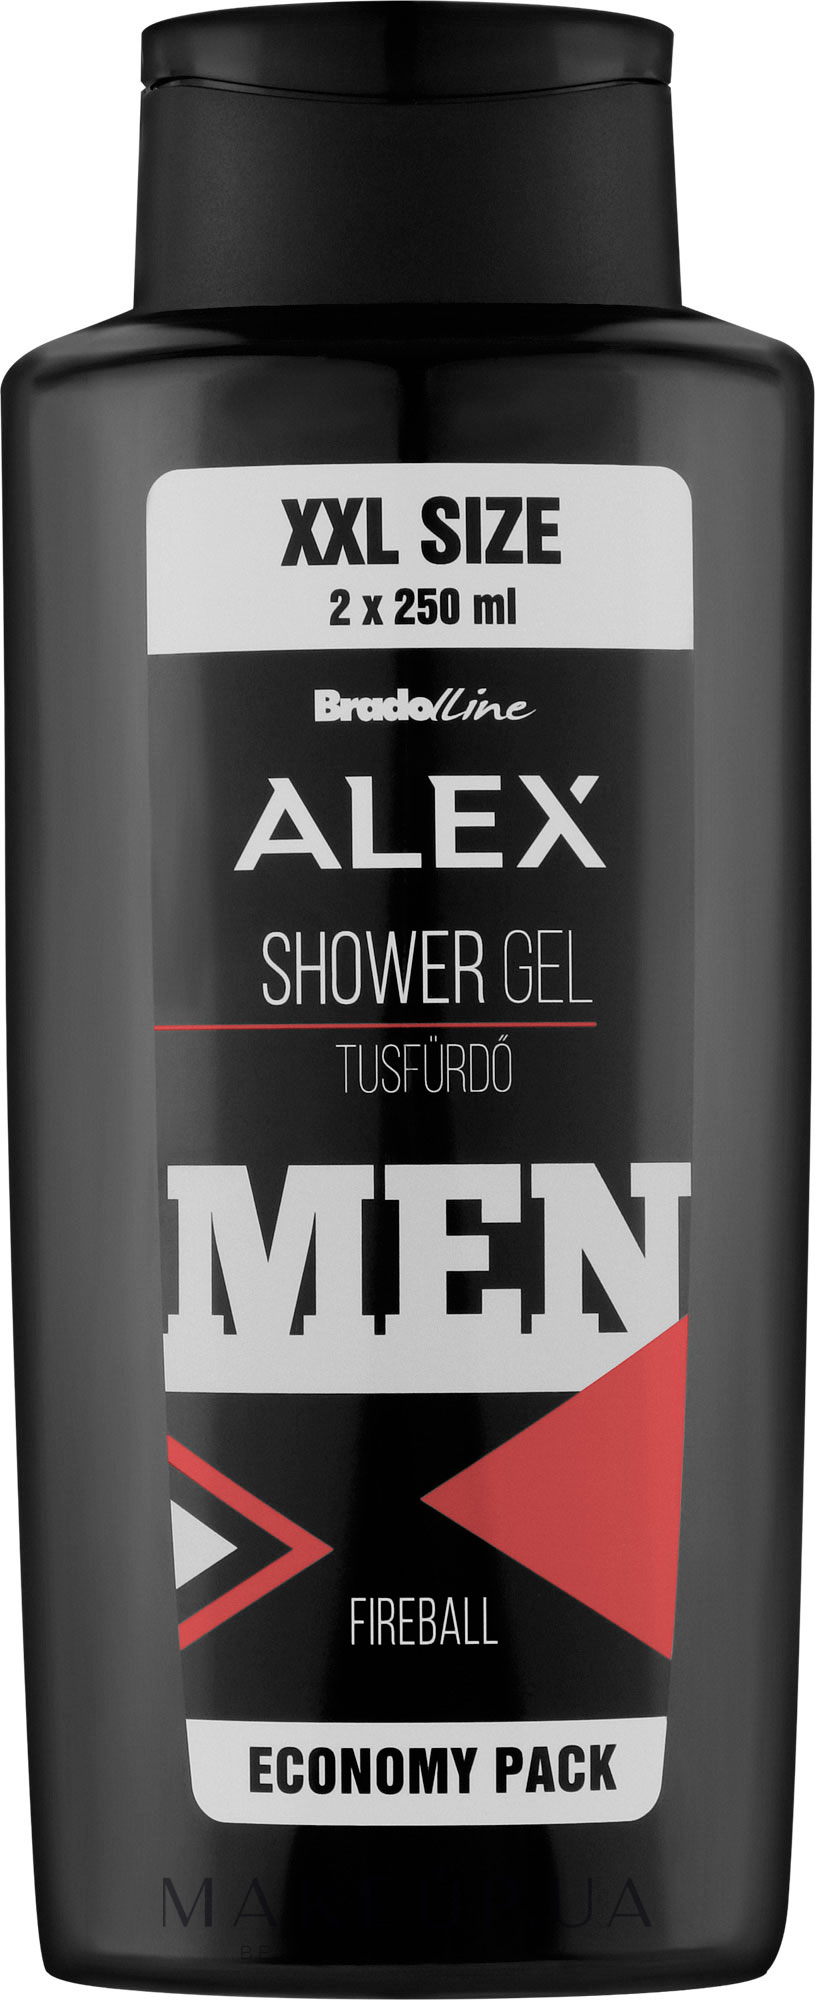 Гель для душа - Bradoline Alex Fireball XXL Size Shower Gell — фото 500ml